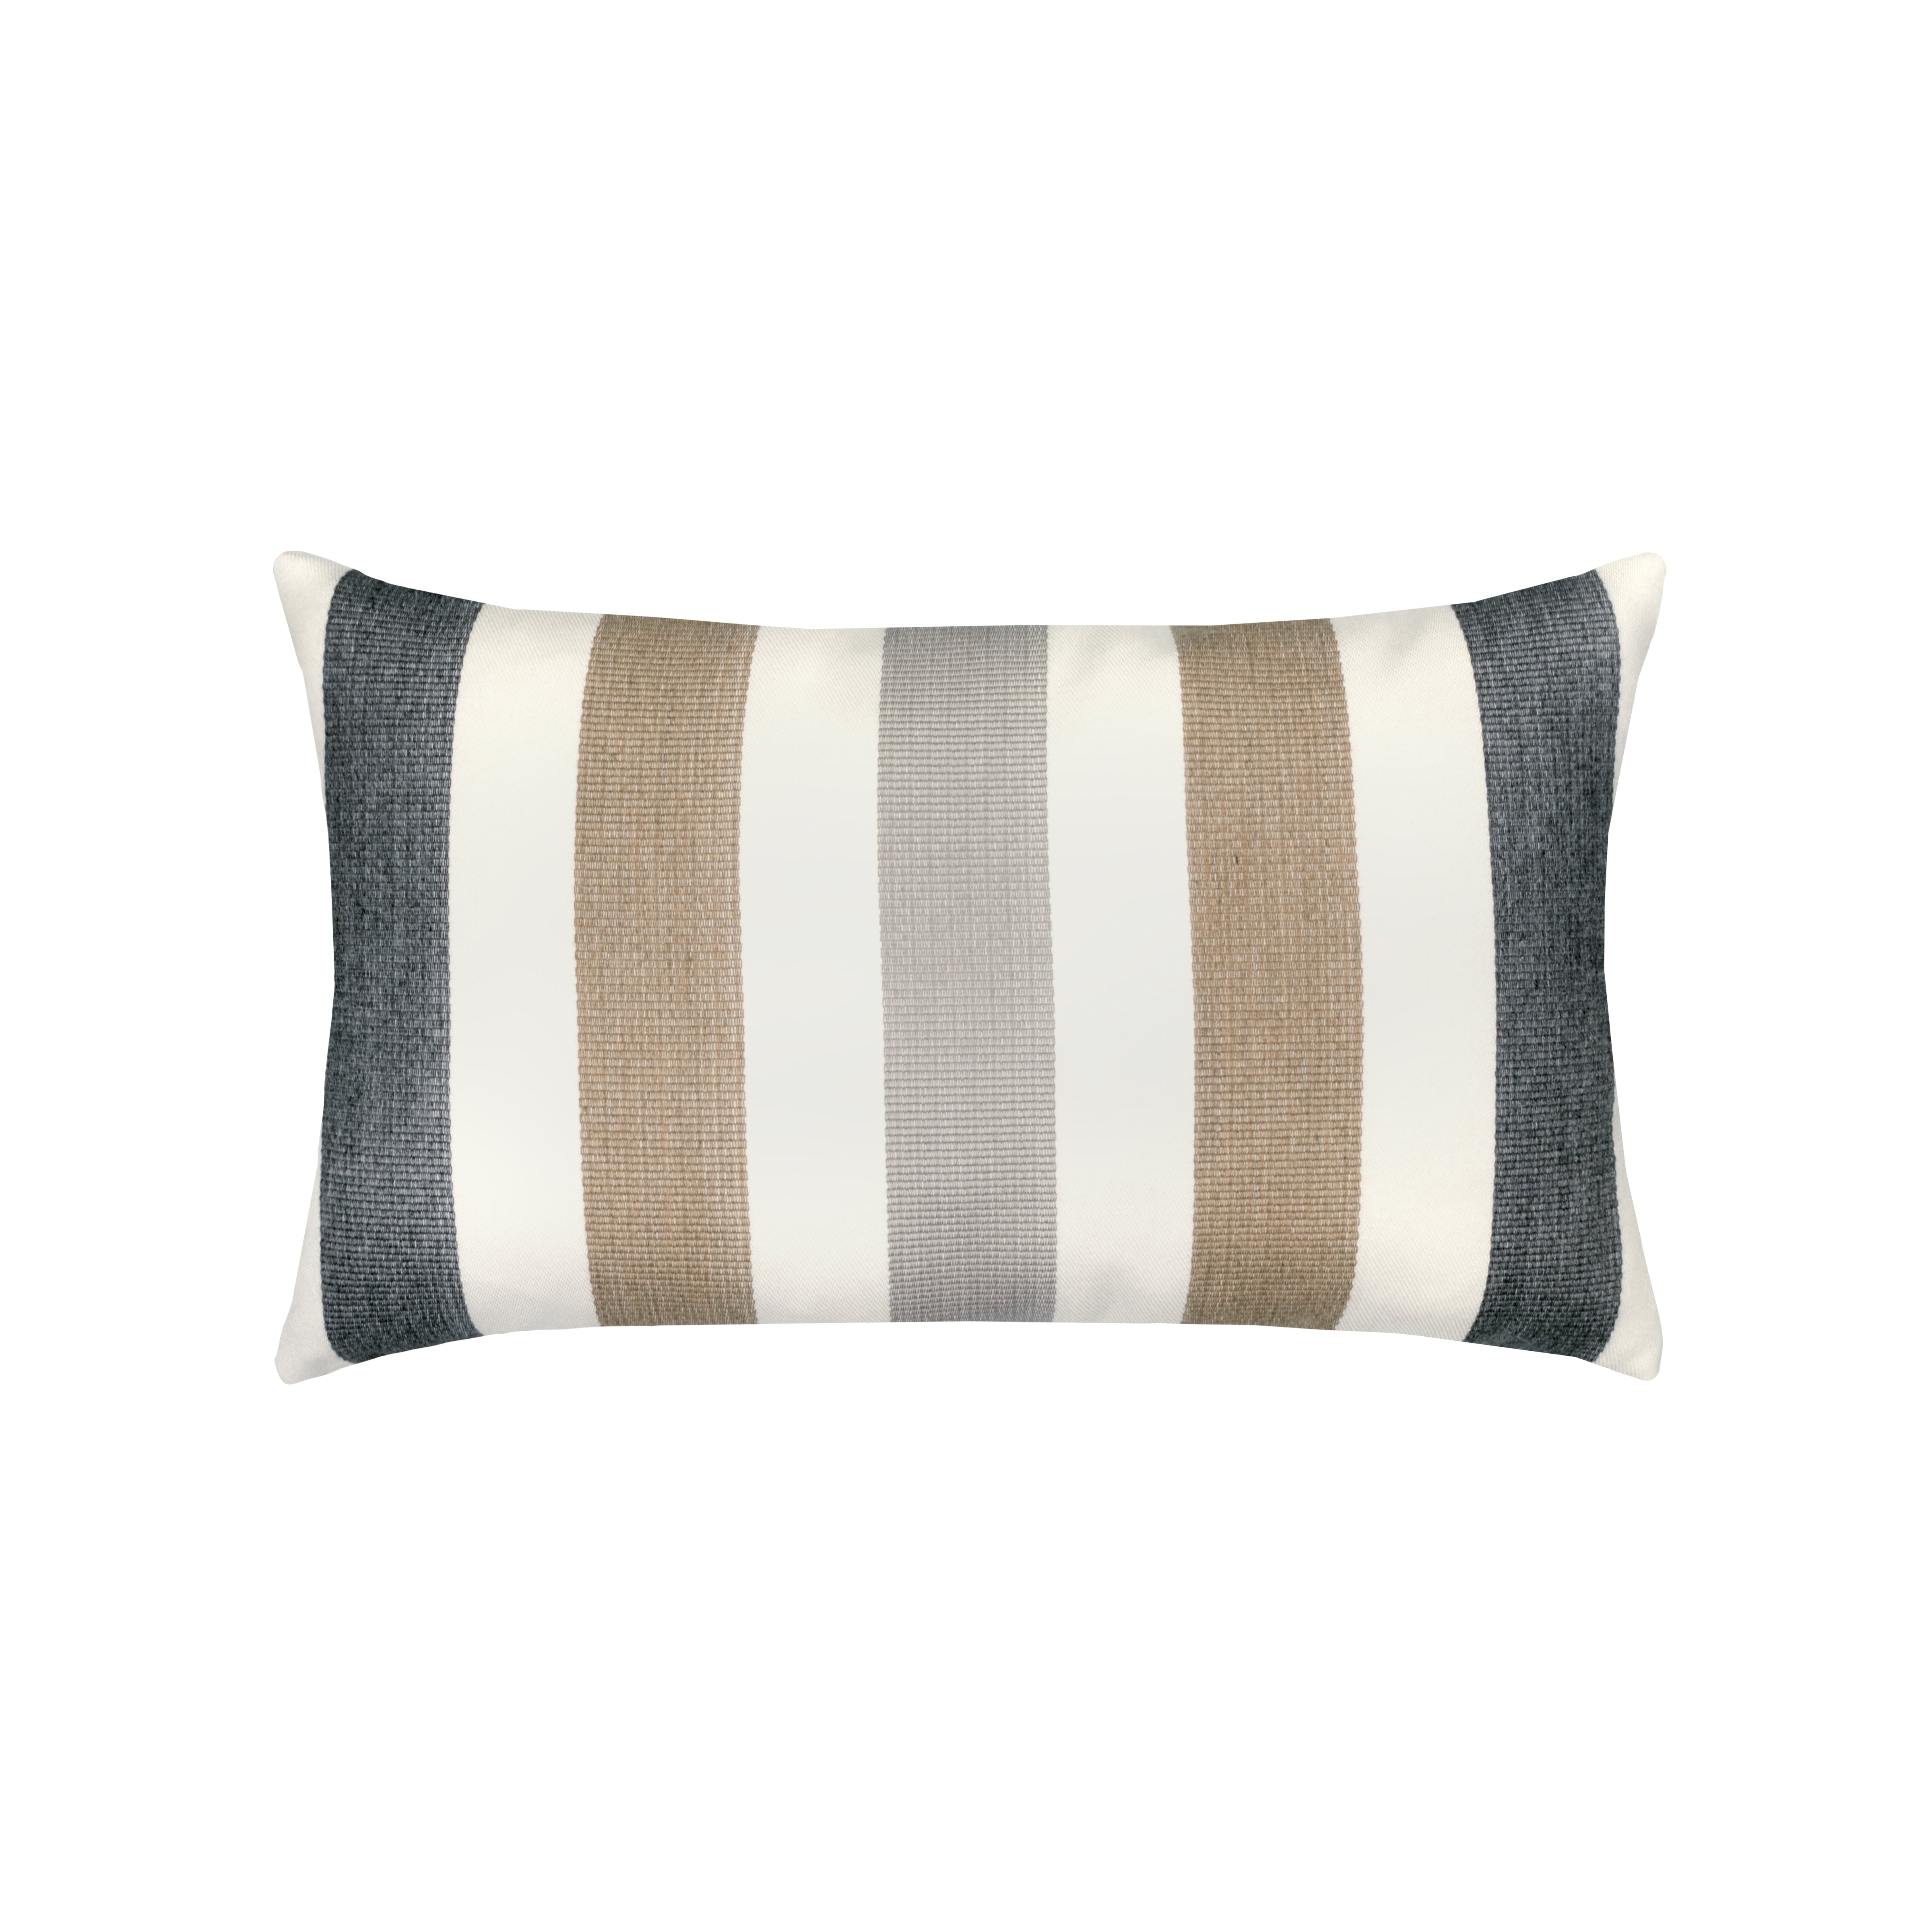 Elaine Smith 12" x 20" Lumbar Outdoor Pillow - Dune Stripe - Polyester Fiber Fill Throw Pillows 12030998